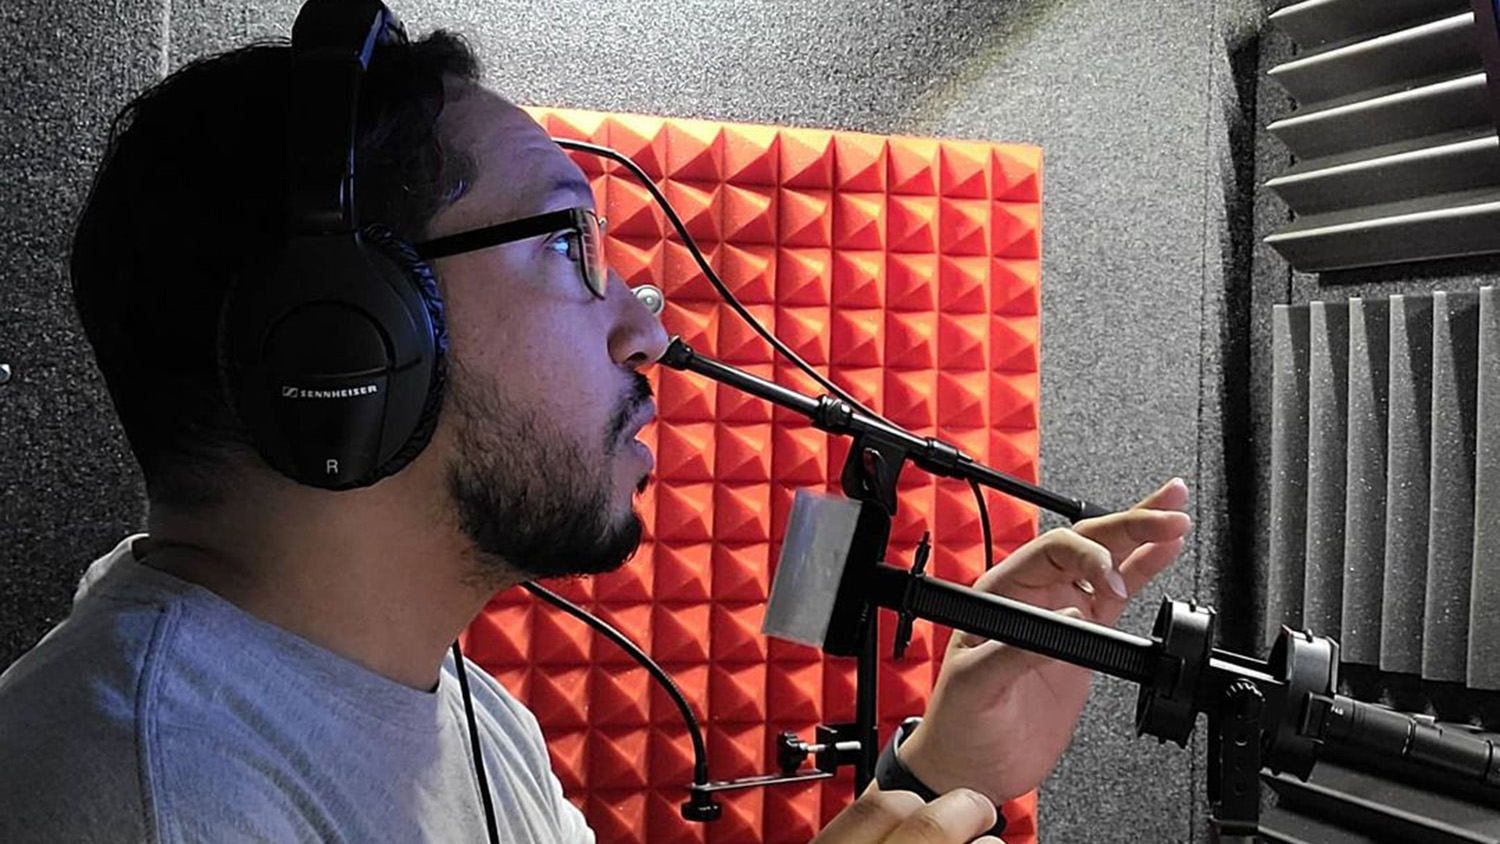 Donovan Corneetz wears a headset while speaking into microphone